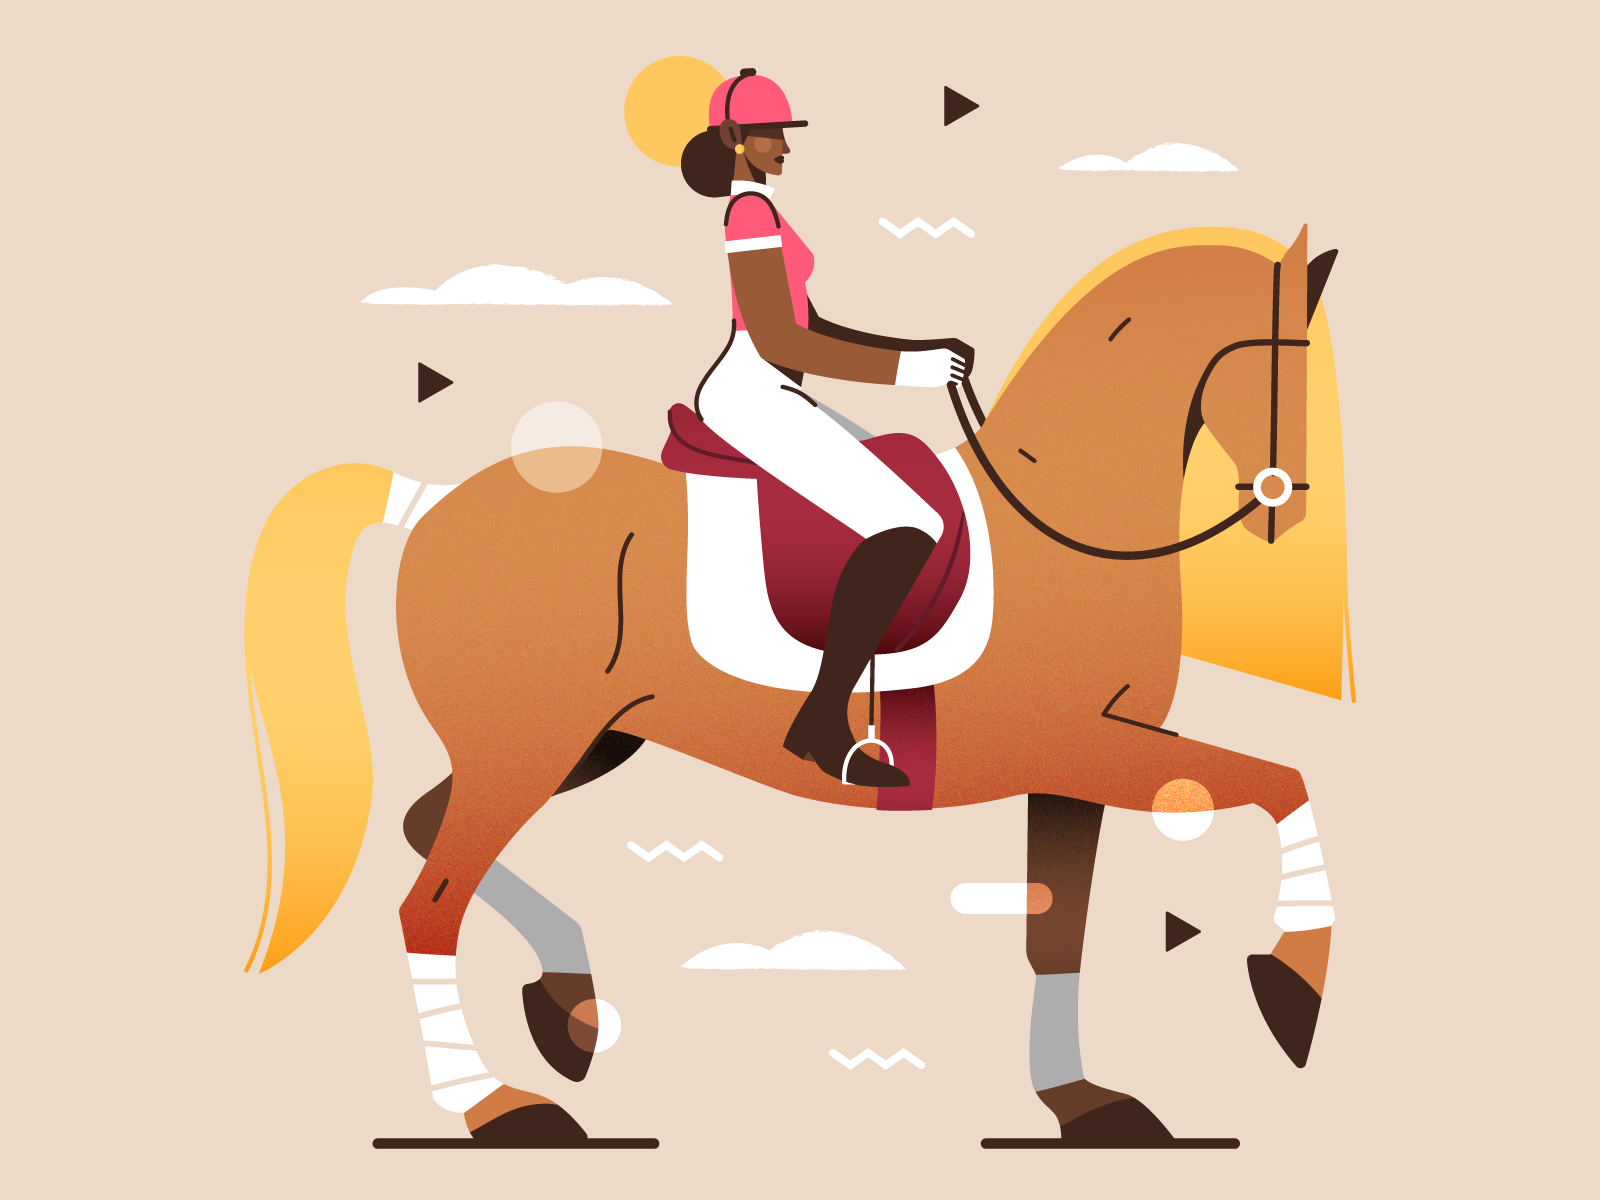 La cavalière 🐴 equestrian equitation flat horse horserider horsewoman illustration rider riding vector